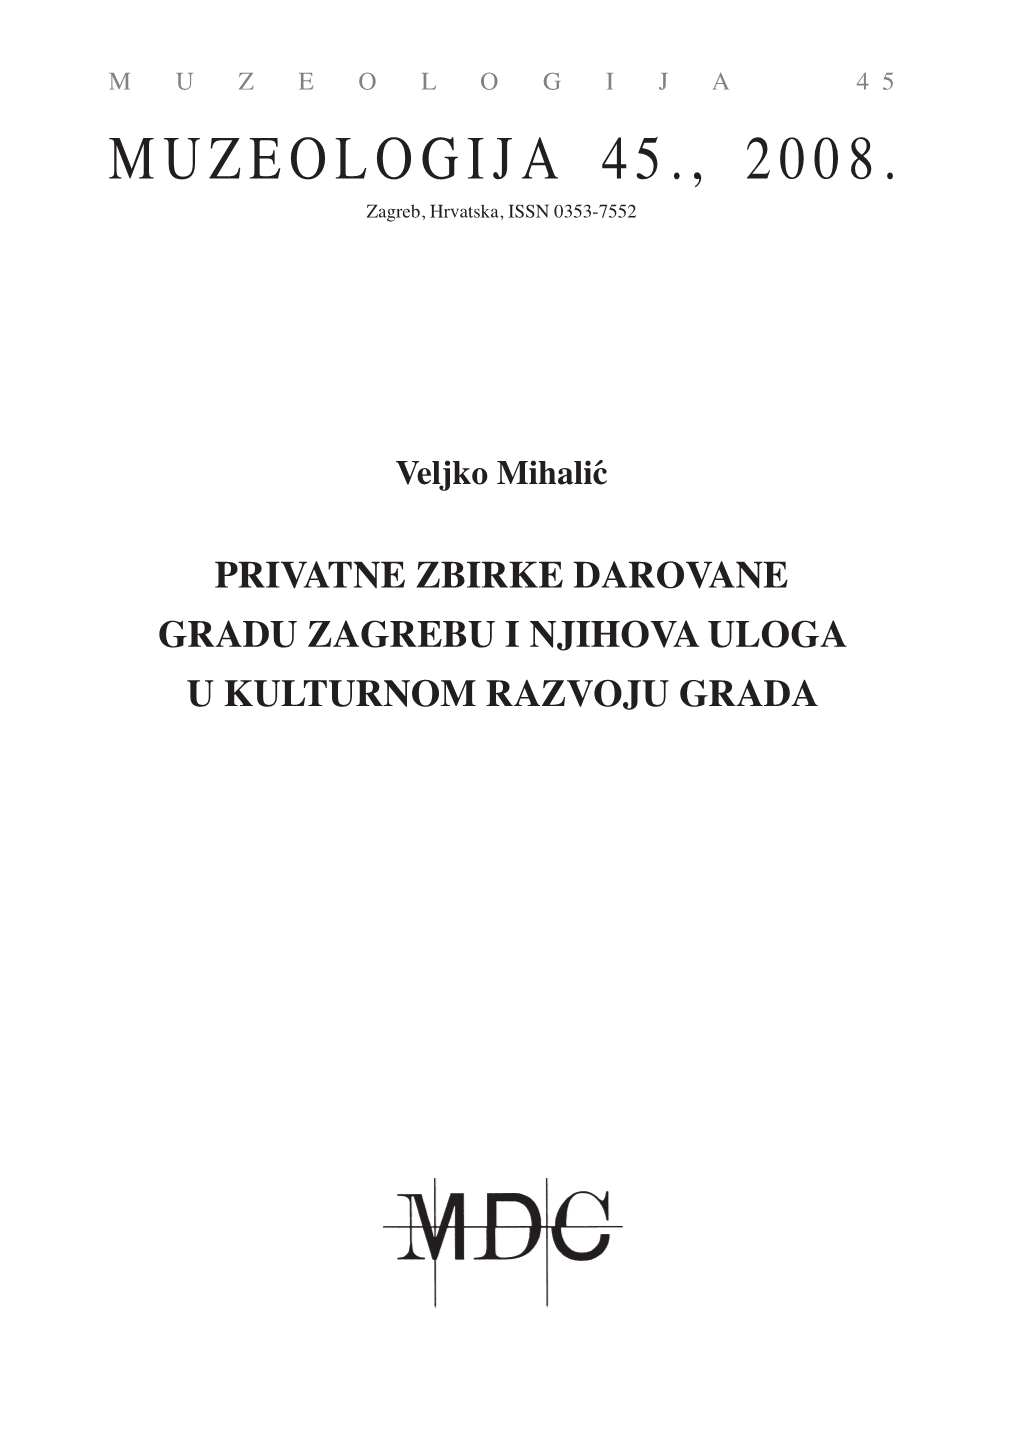 MUZEOLOGIJA 45., 2008. Zagreb, Hrvatska, ISSN 0353-7552